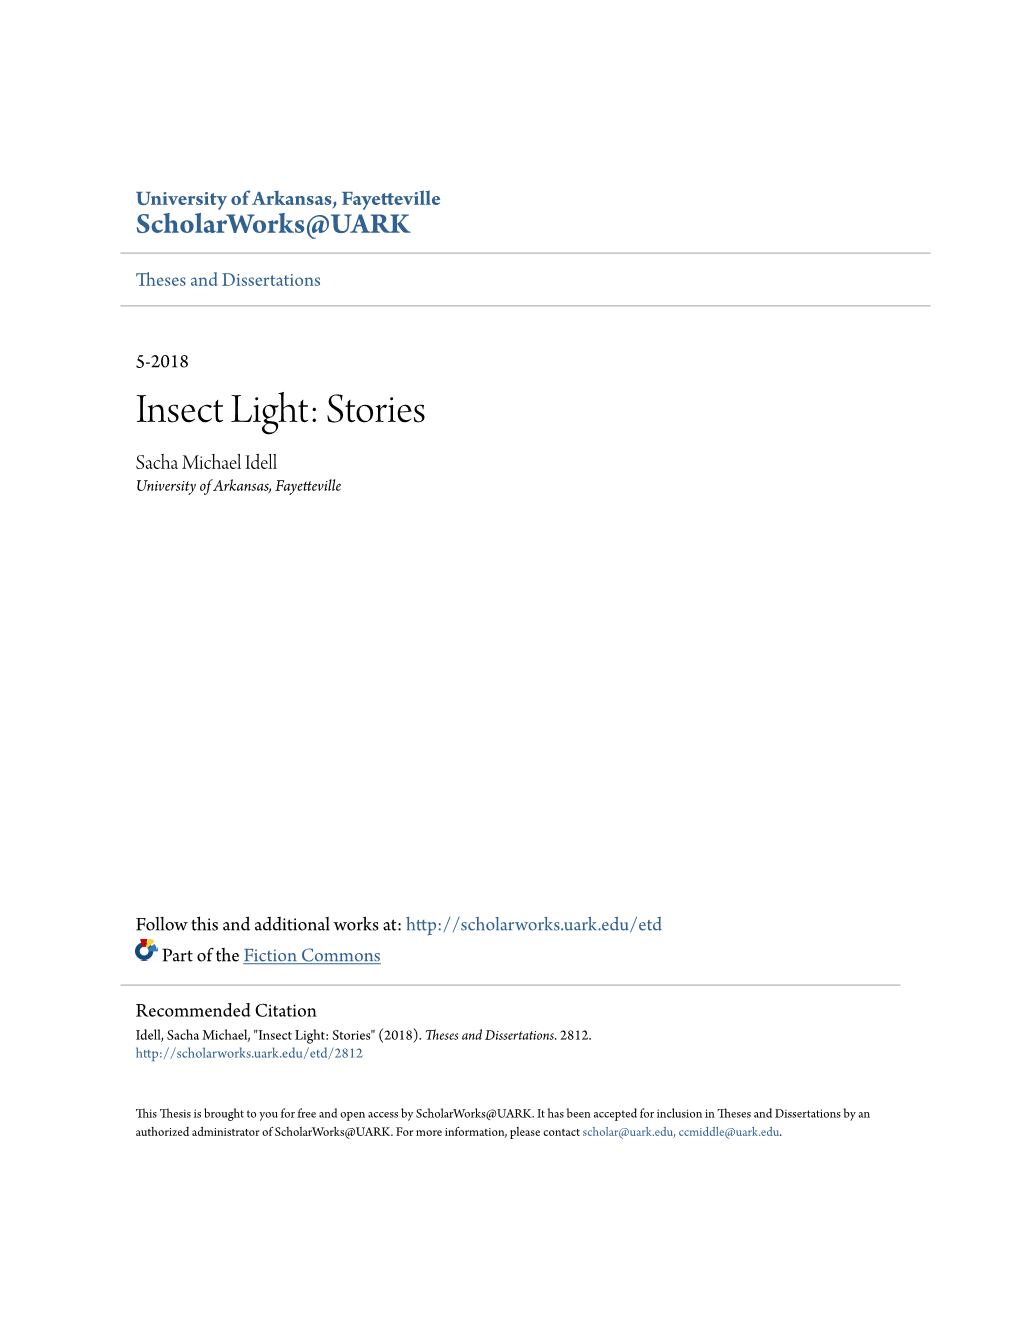 Insect Light: Stories Sacha Michael Idell University of Arkansas, Fayetteville